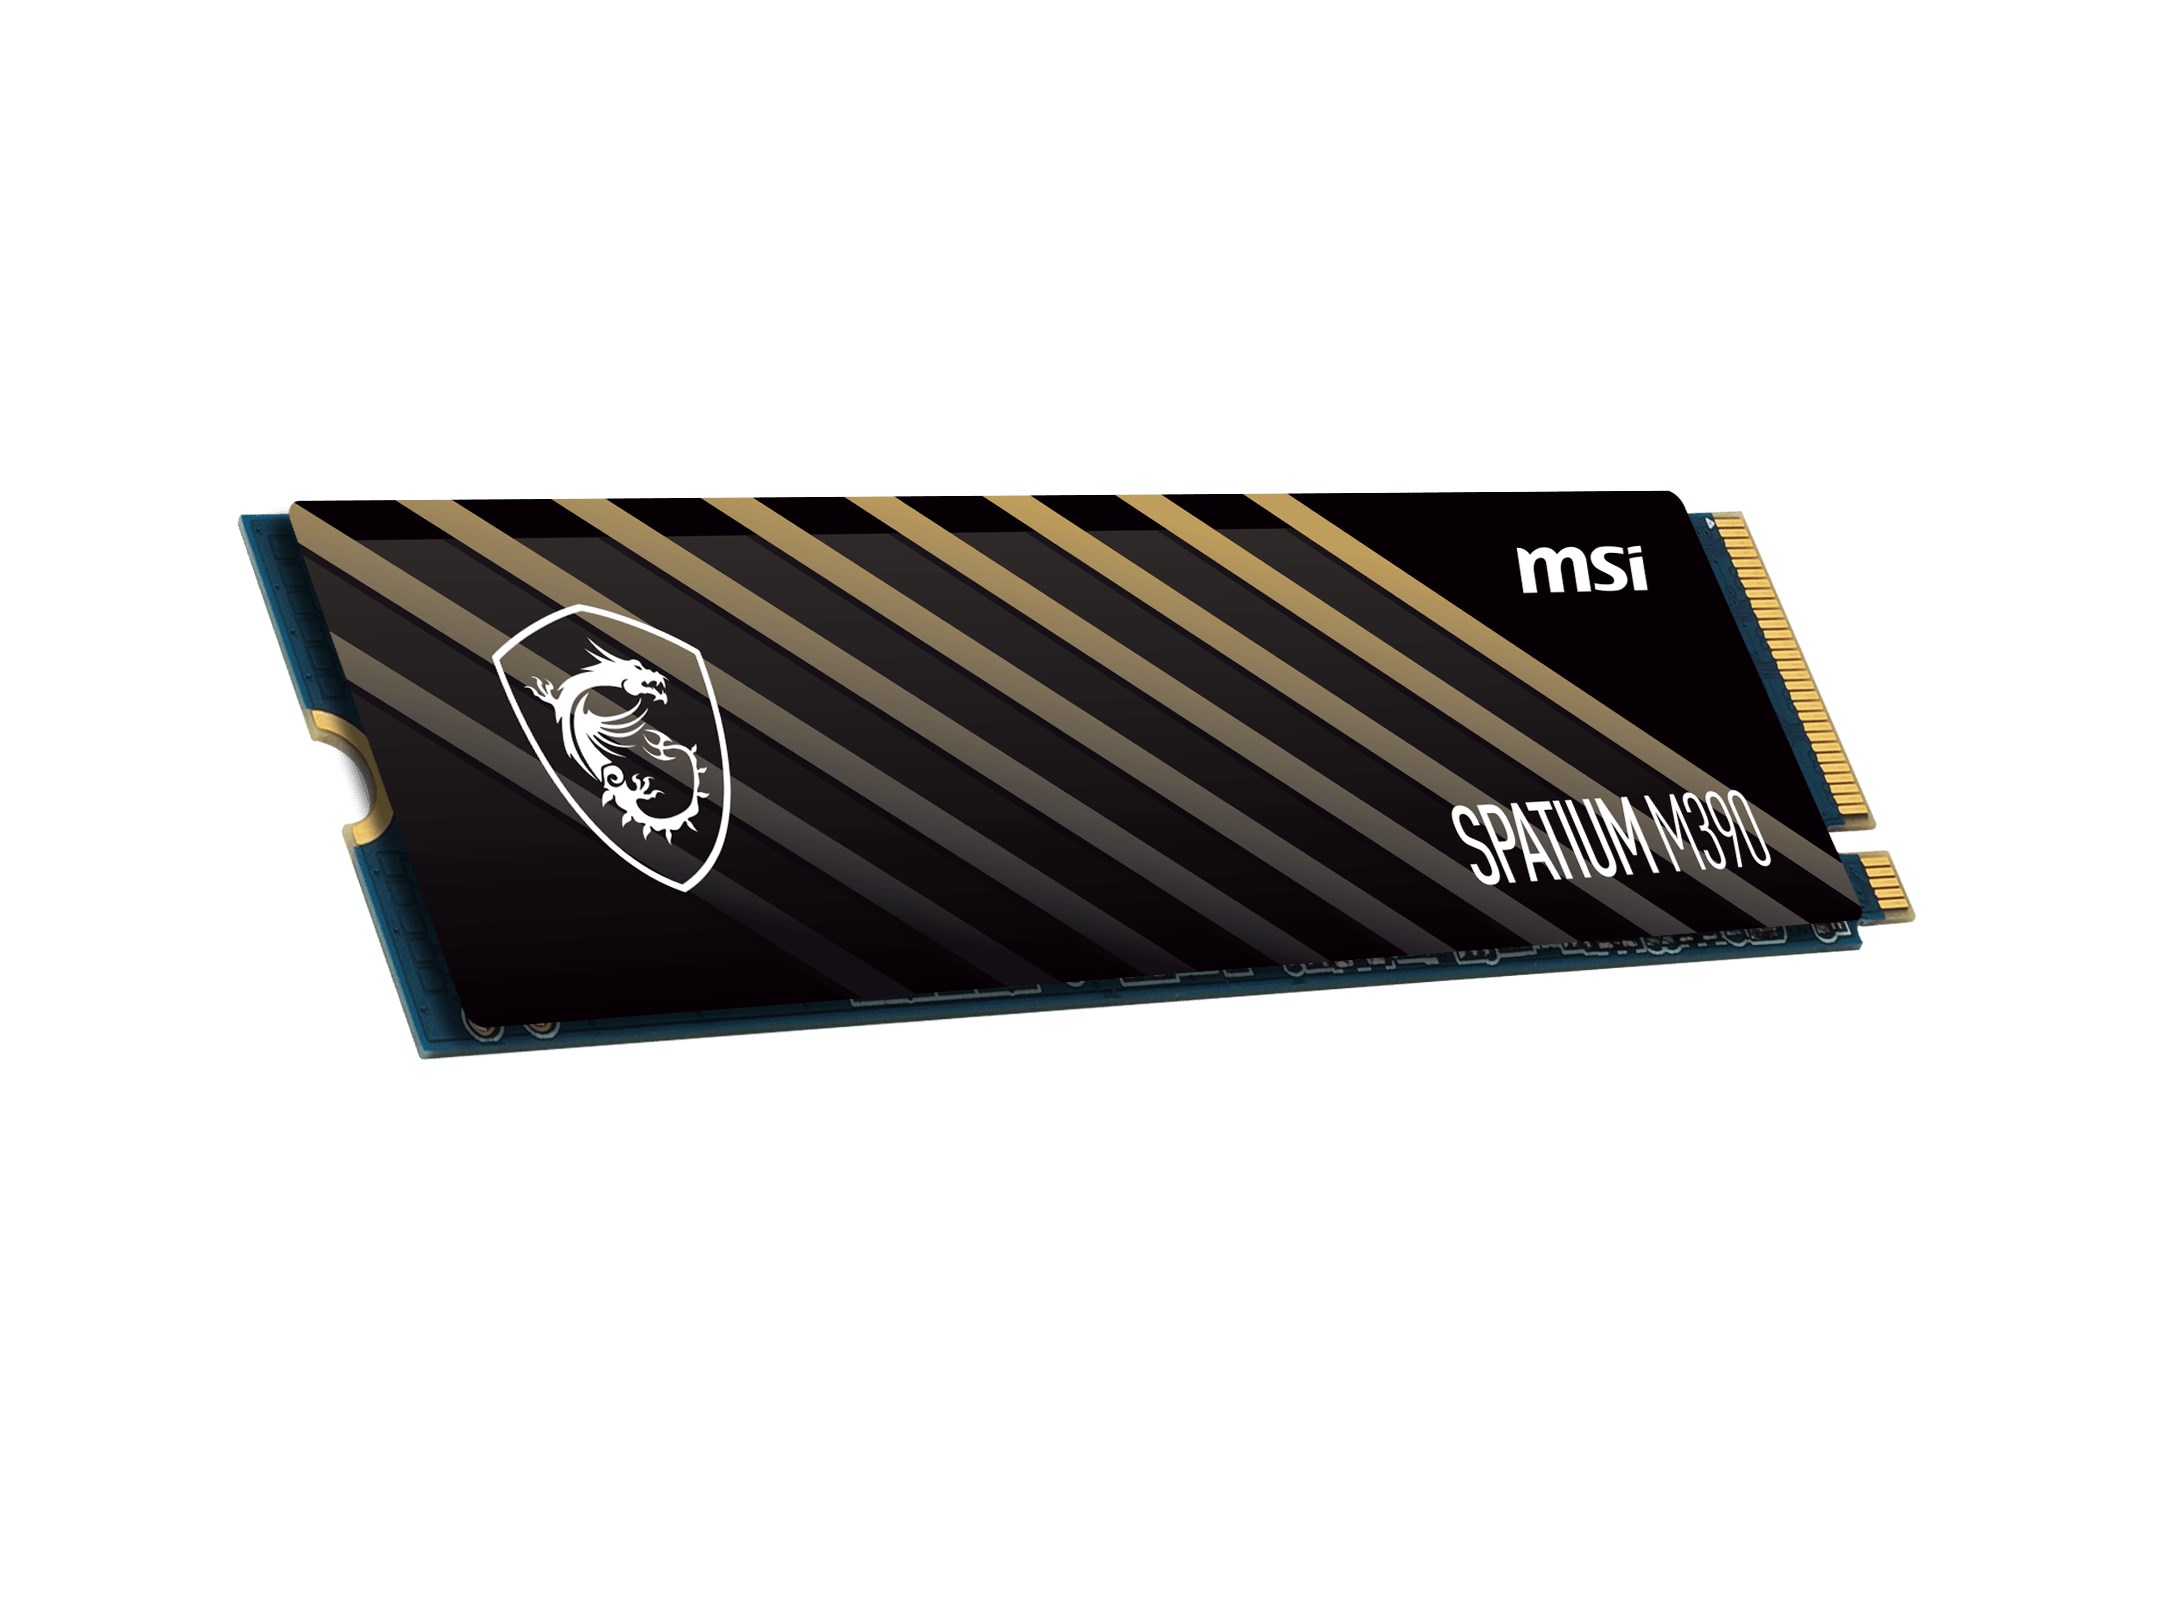 MSI Spatium M390 500 GB 3300/2300 MB/S NVMe M.2 SSD